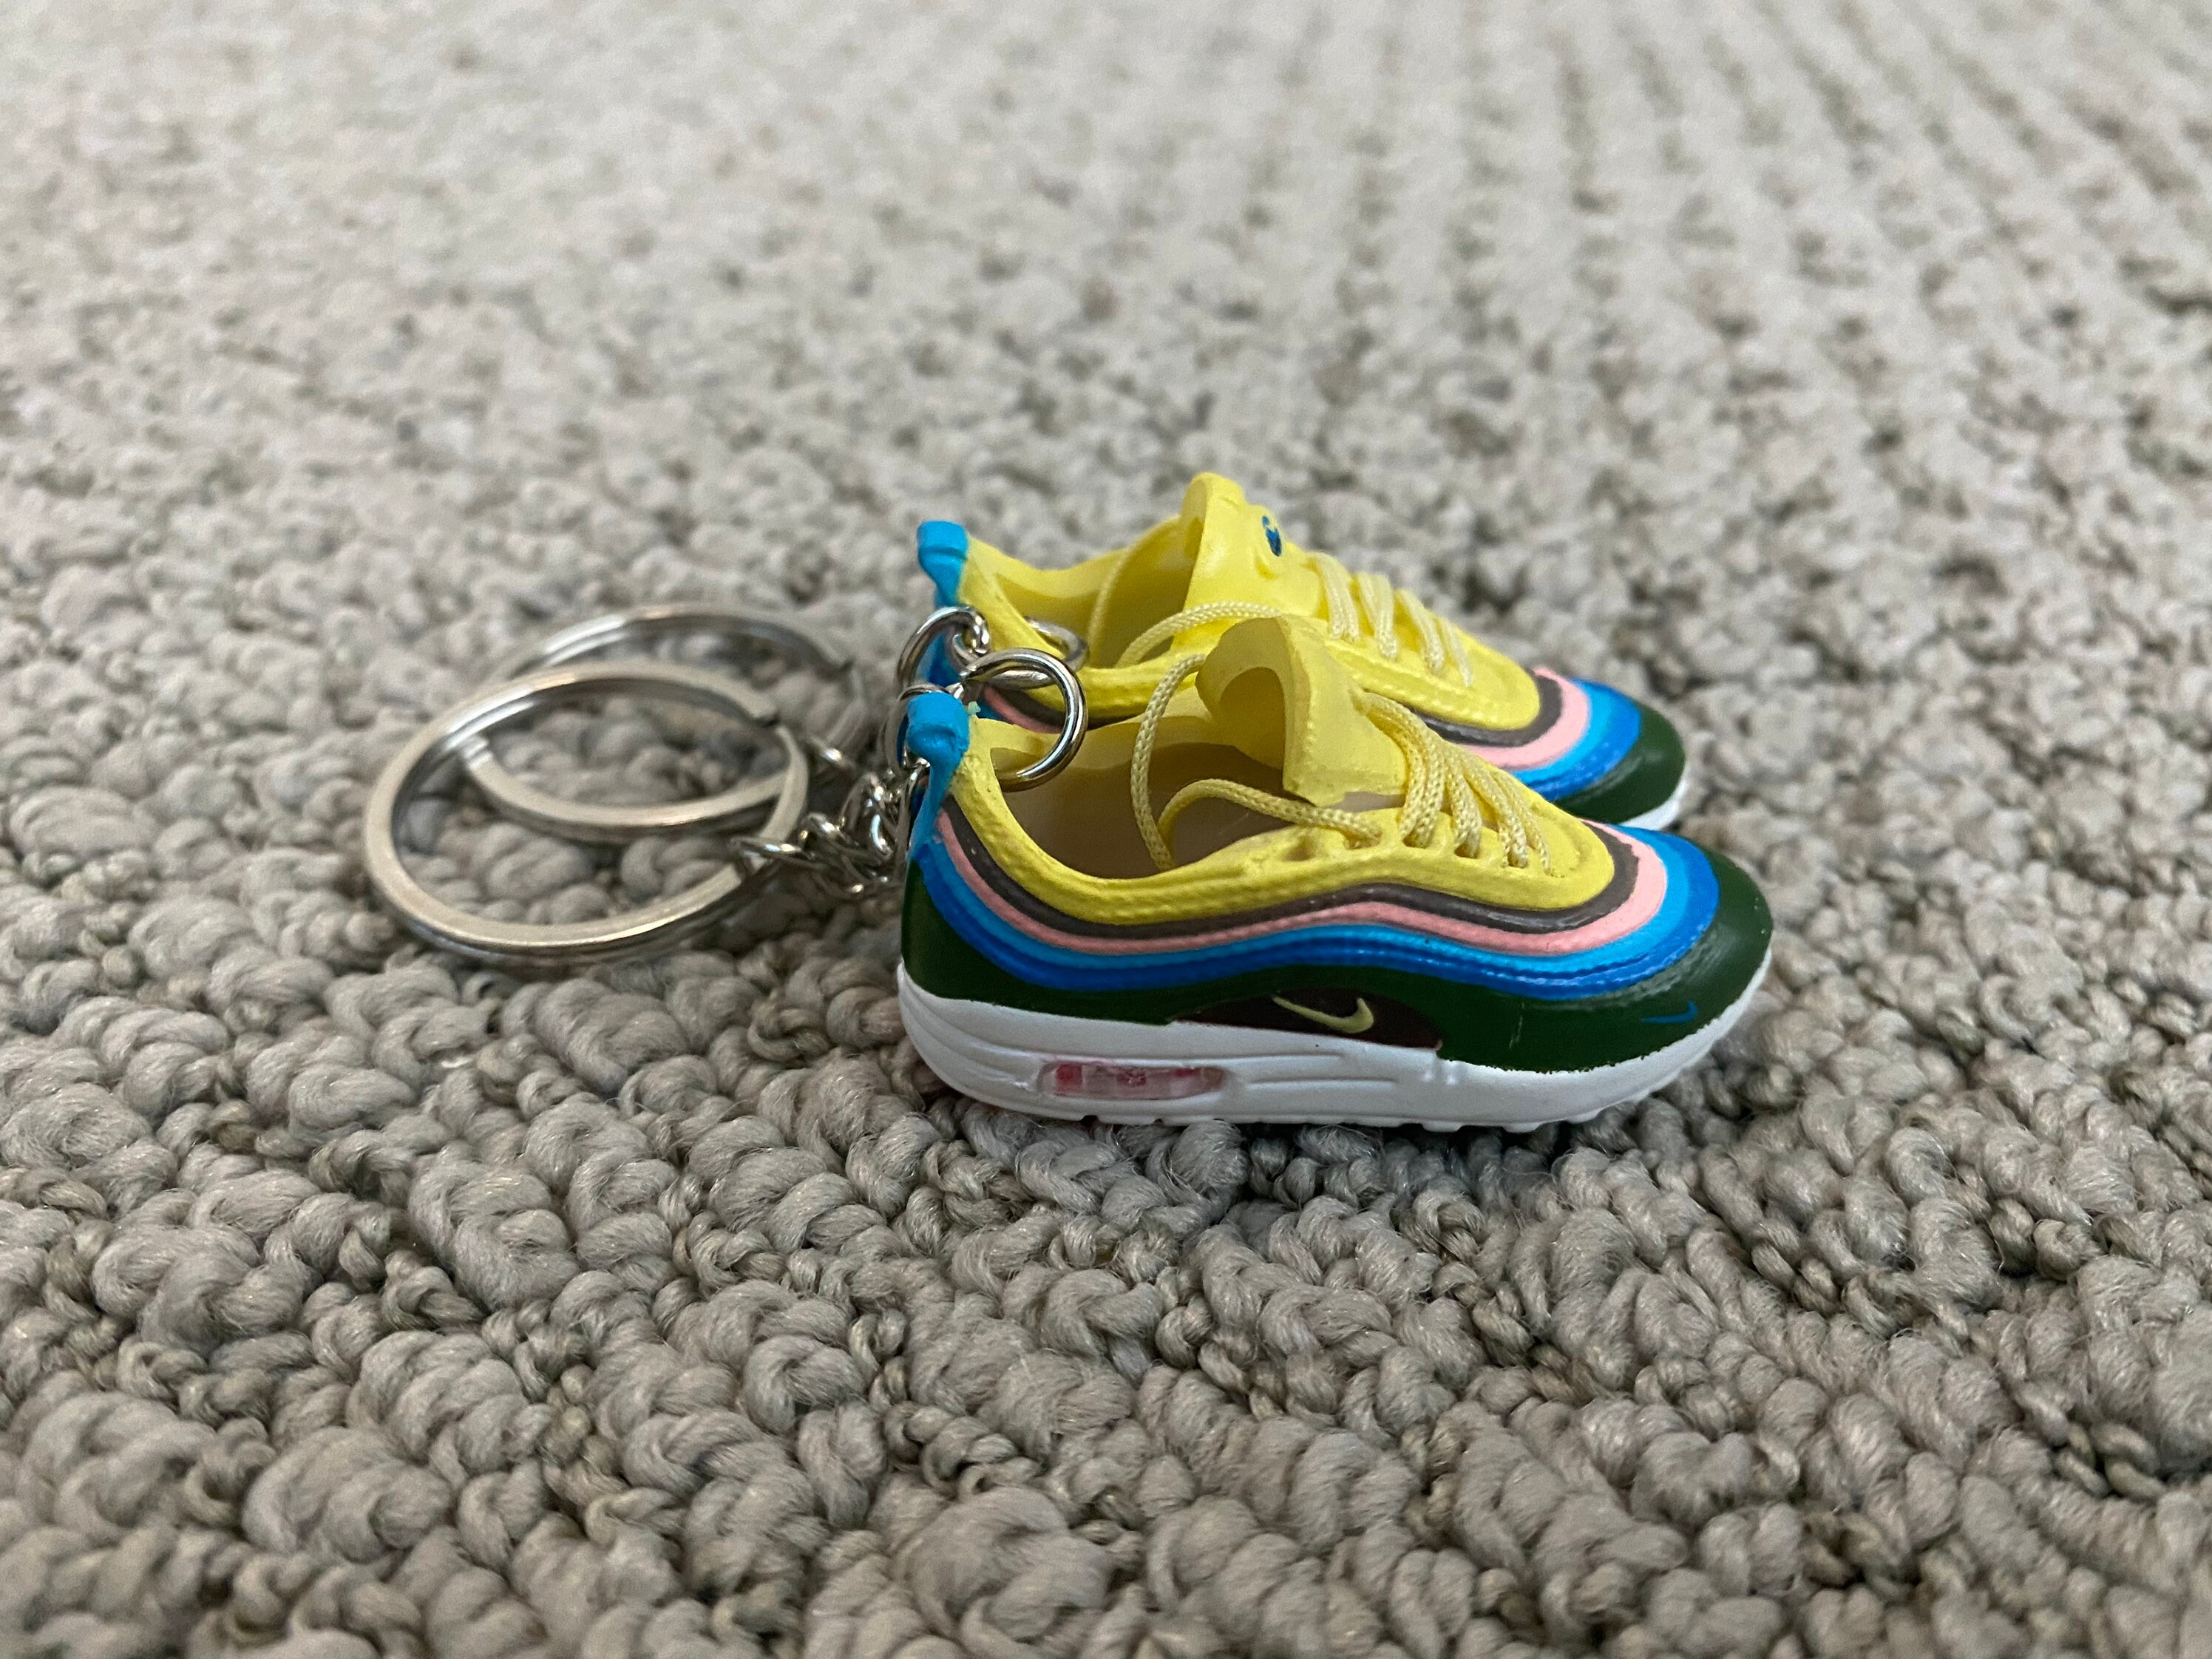 Delicate 3D mini sneaker key chain simulating interesting basketball shoe  key ring DIY finger skateboaa birthday present - AliExpress